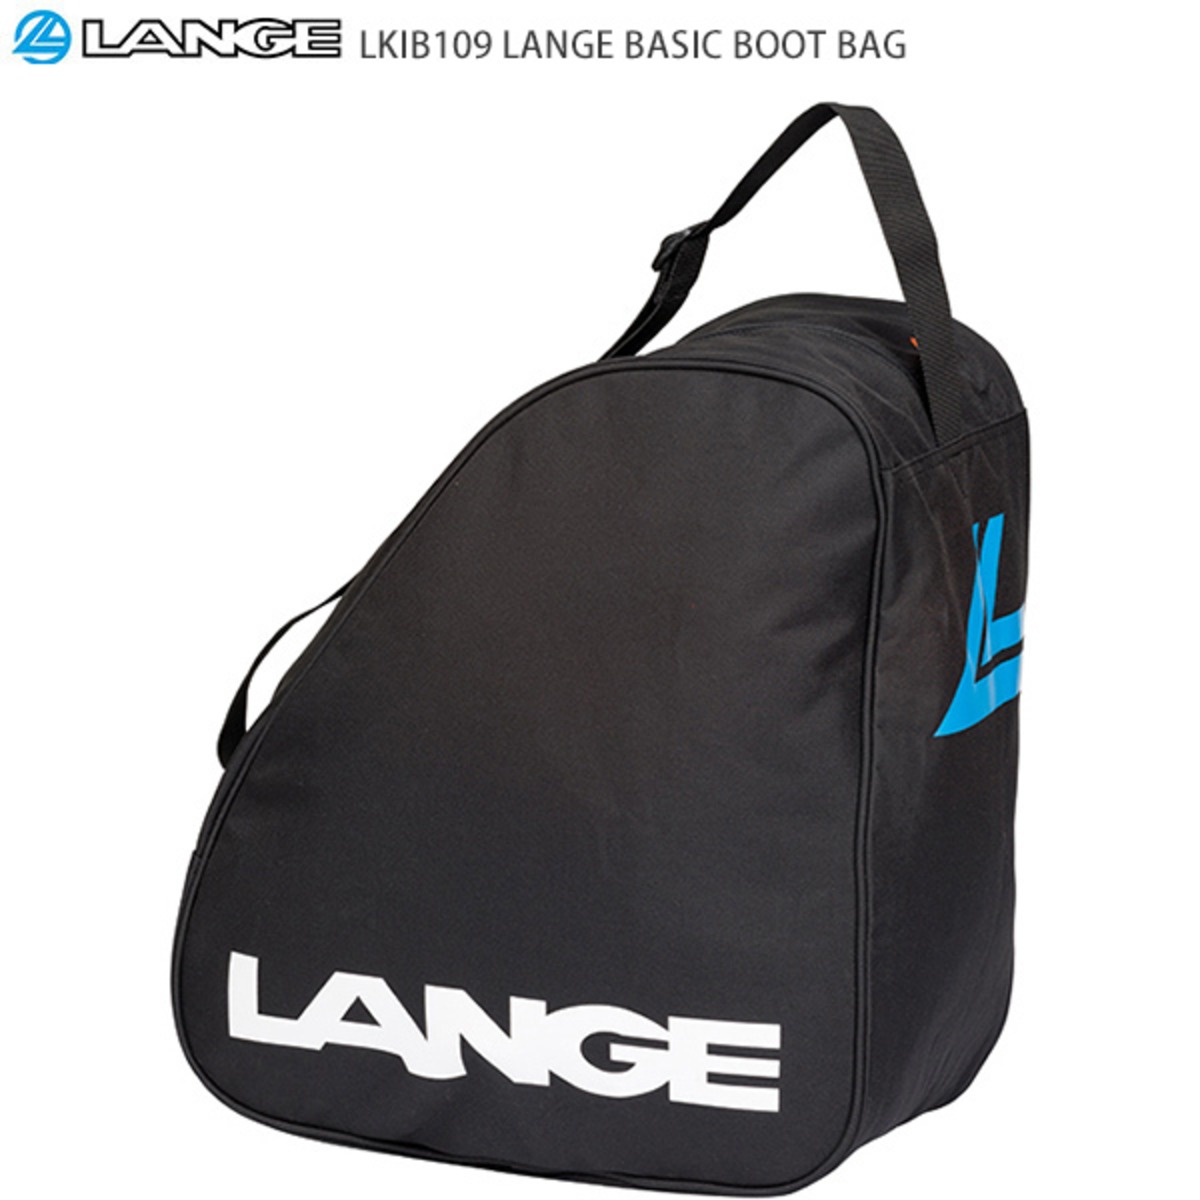 LANGE ラング ブーツバック LANGE BASIC BOOT BAG LKIB109 | DKスキーサービス WEB SHOP Racing  Aterier